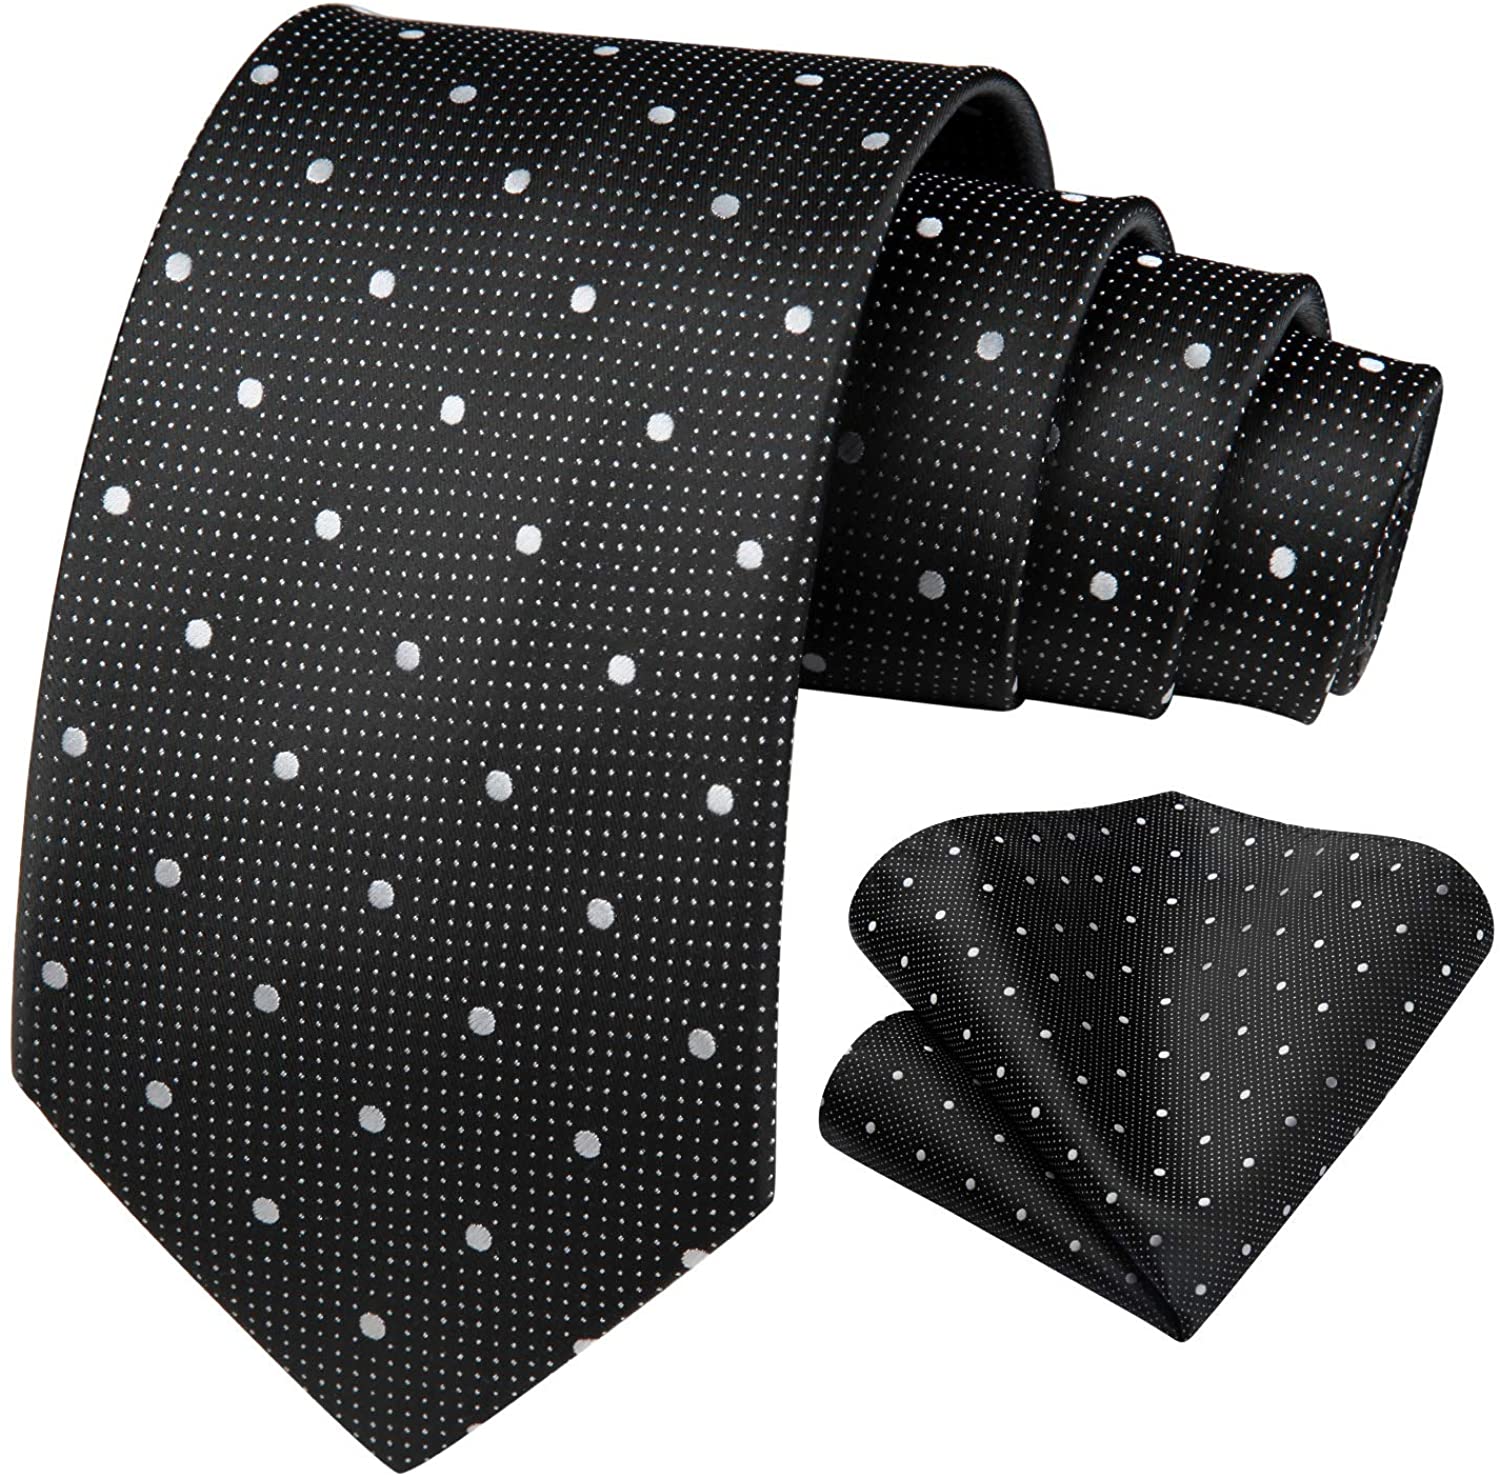 Mens Tie Woven Polka Dot Formal Standard Necktie FREE Bow & Pocket Square by DQT 